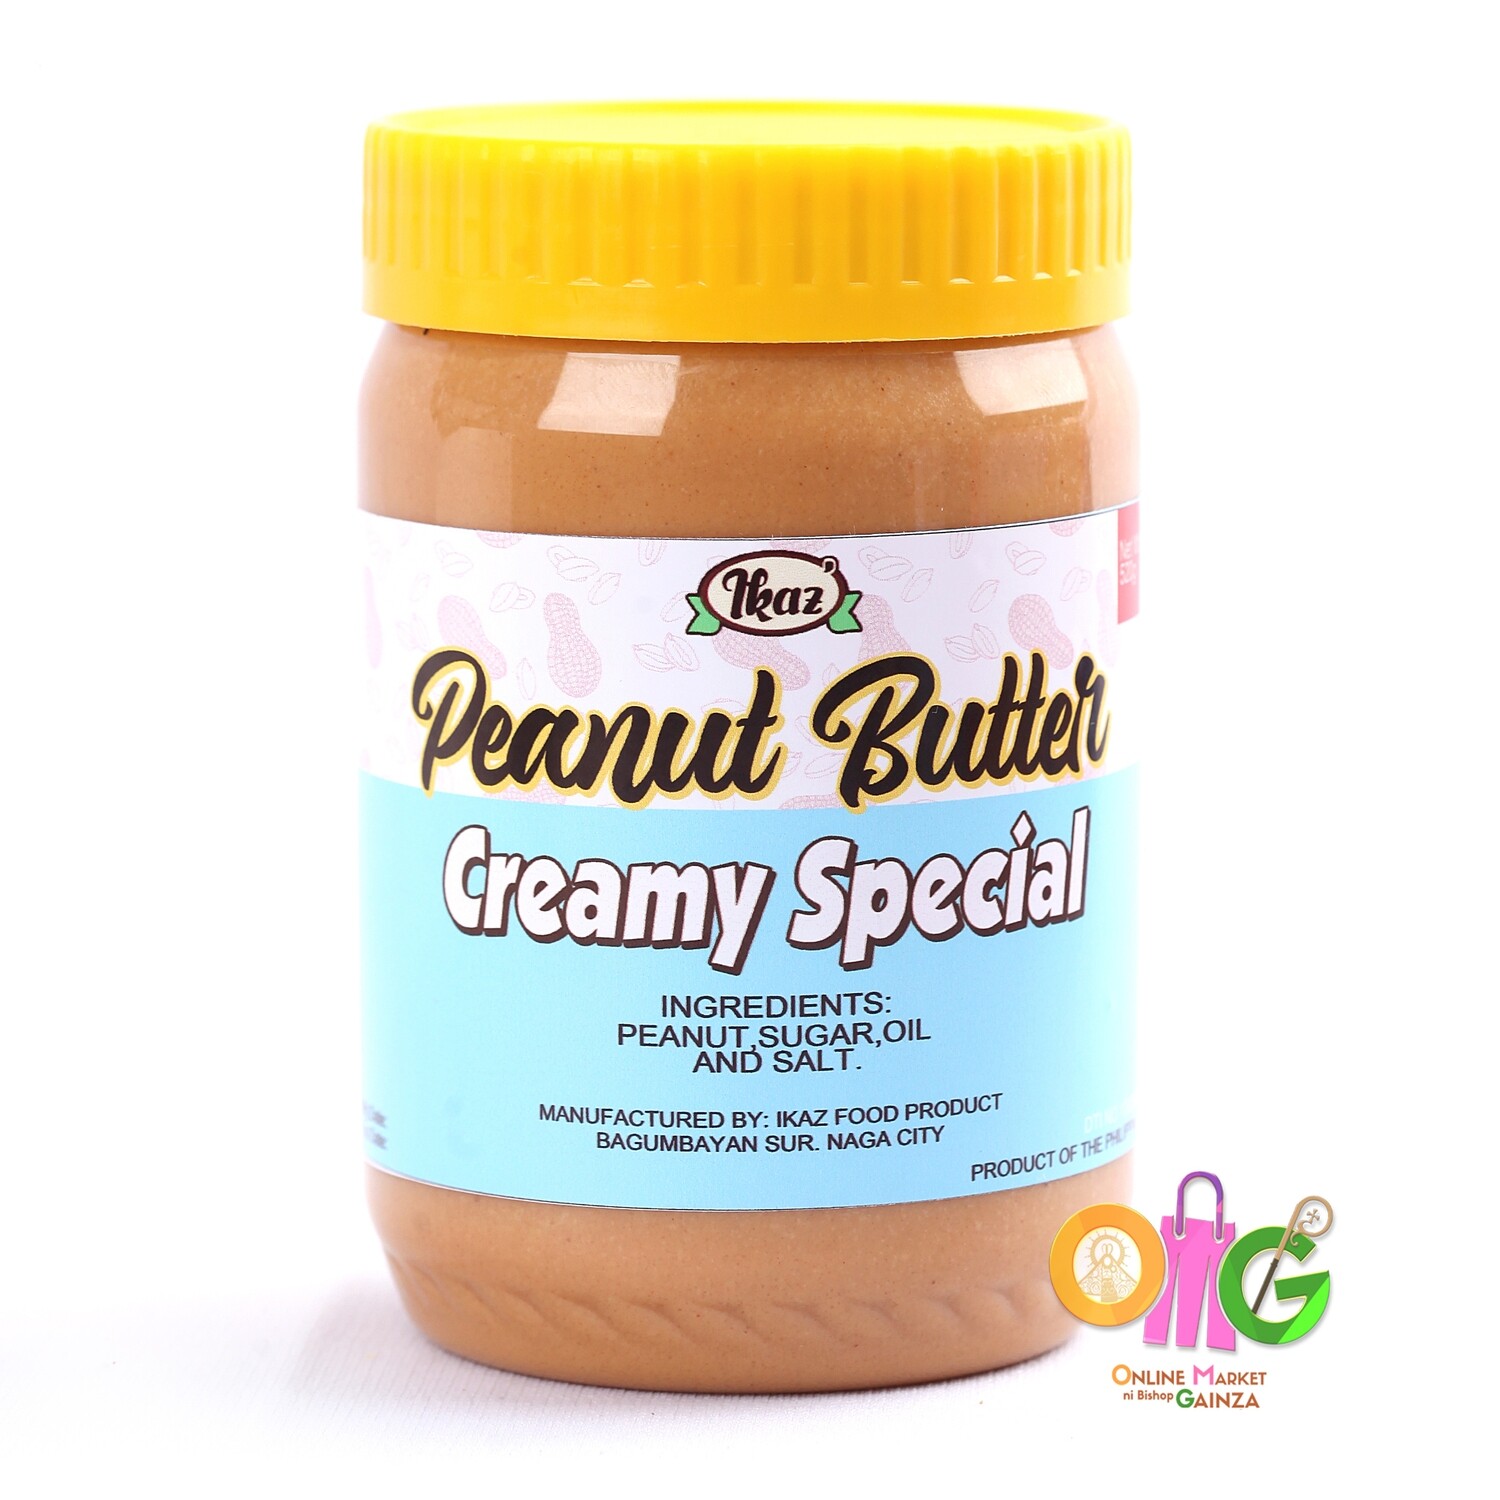 Ikaz - Creamy Special Peanut Butter